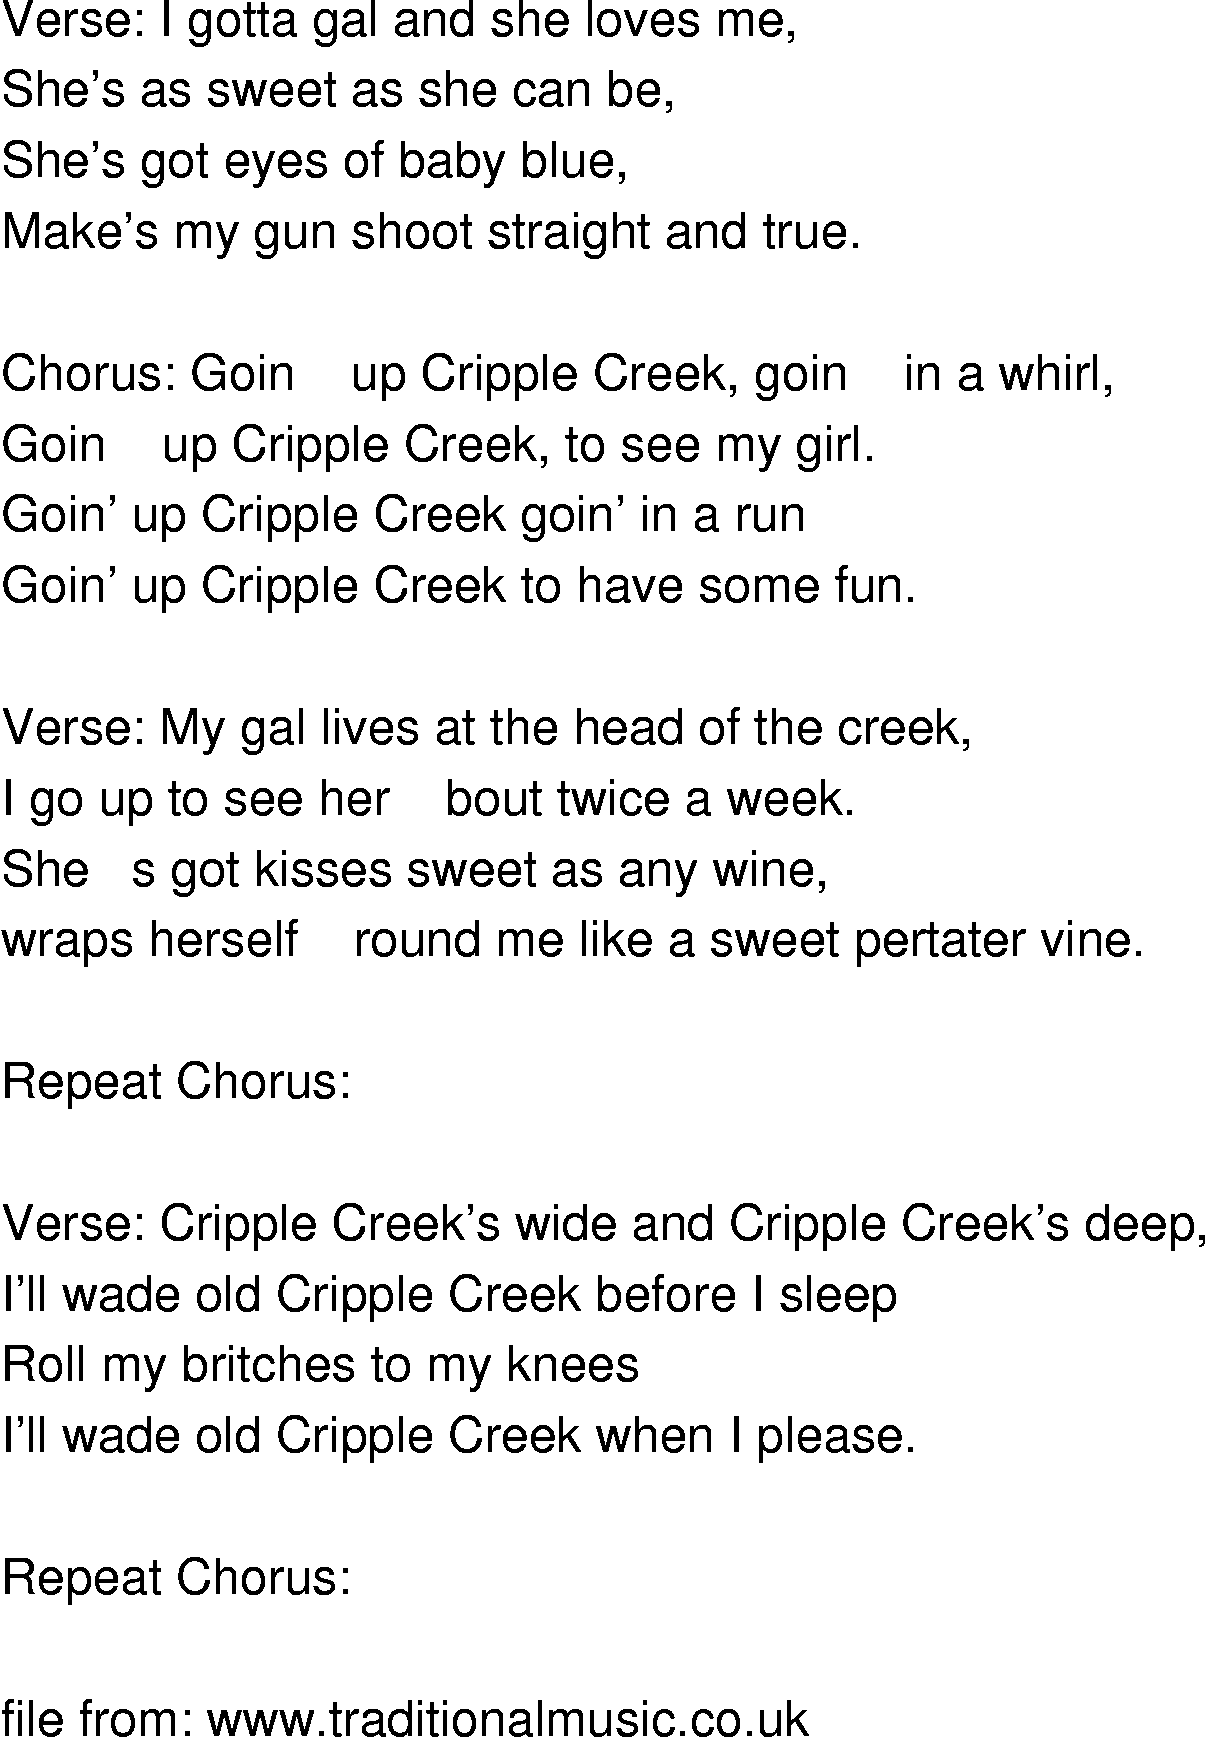 Old-Time (oldtimey) Song Lyrics - cripple creek